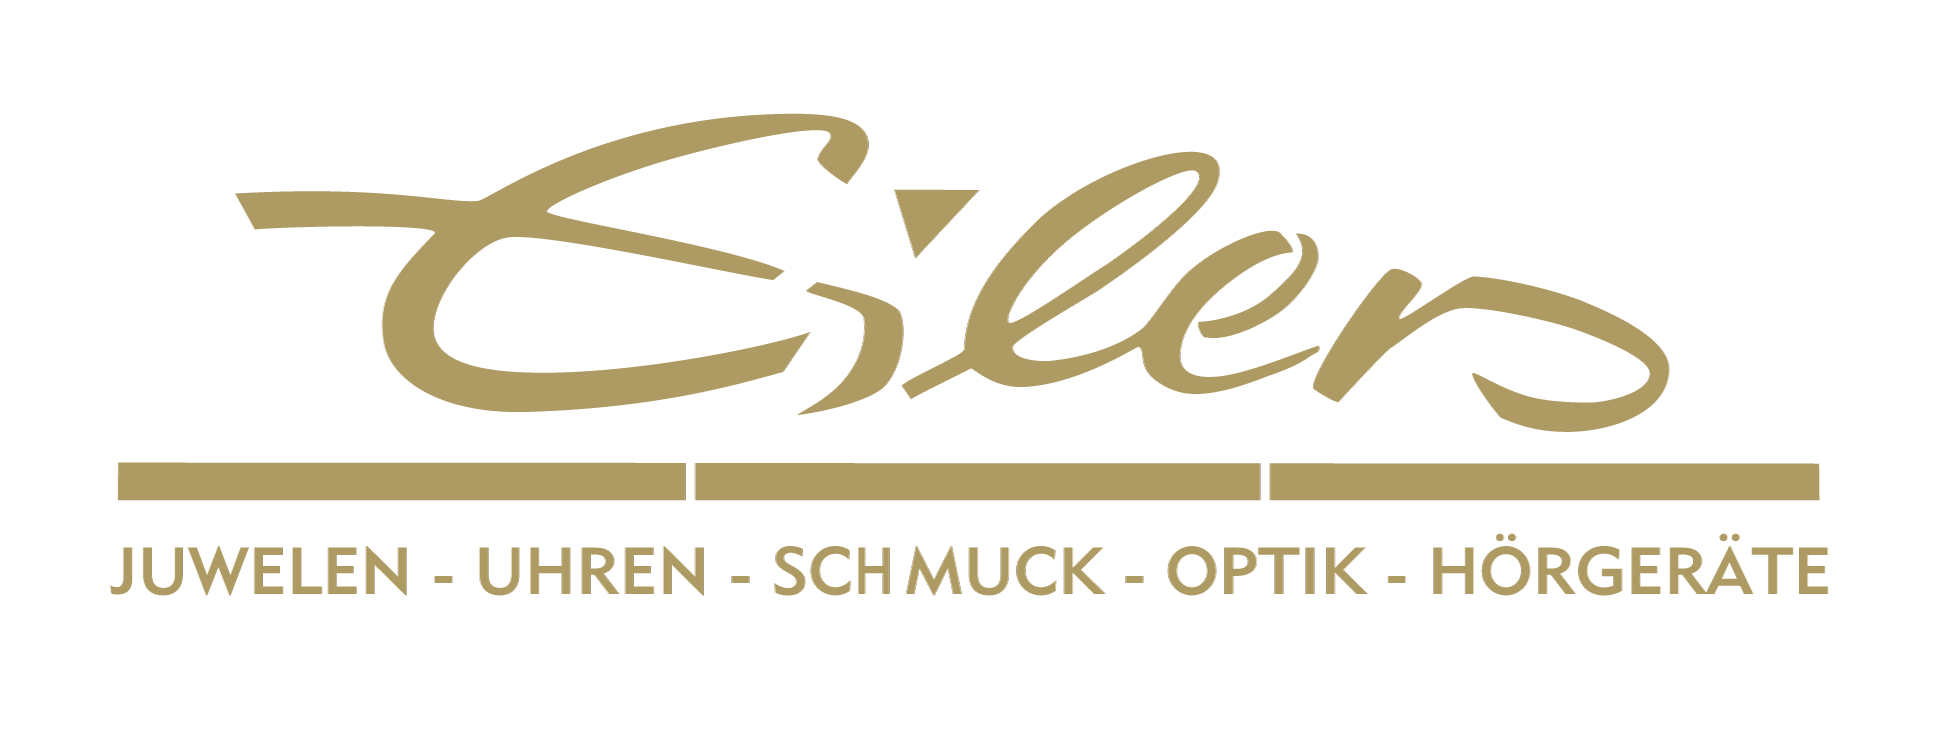 You are currently viewing Eilers Uhren Schmuck Optik Hörgeräte